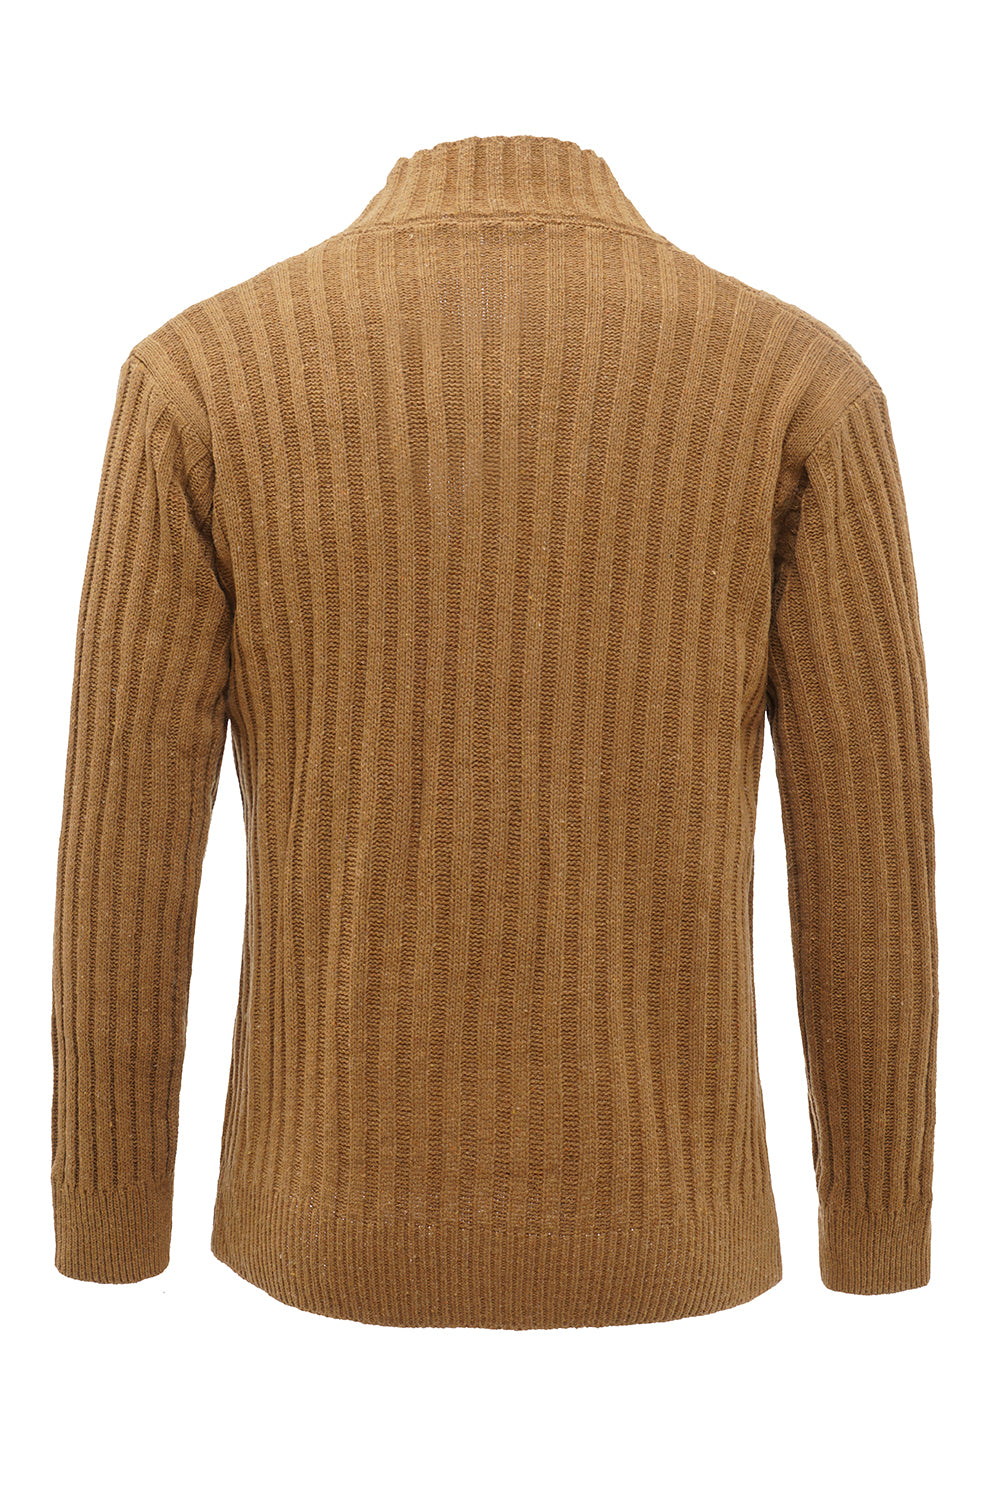 Brown Shawl Collar Button Men's Cardigan Sweater